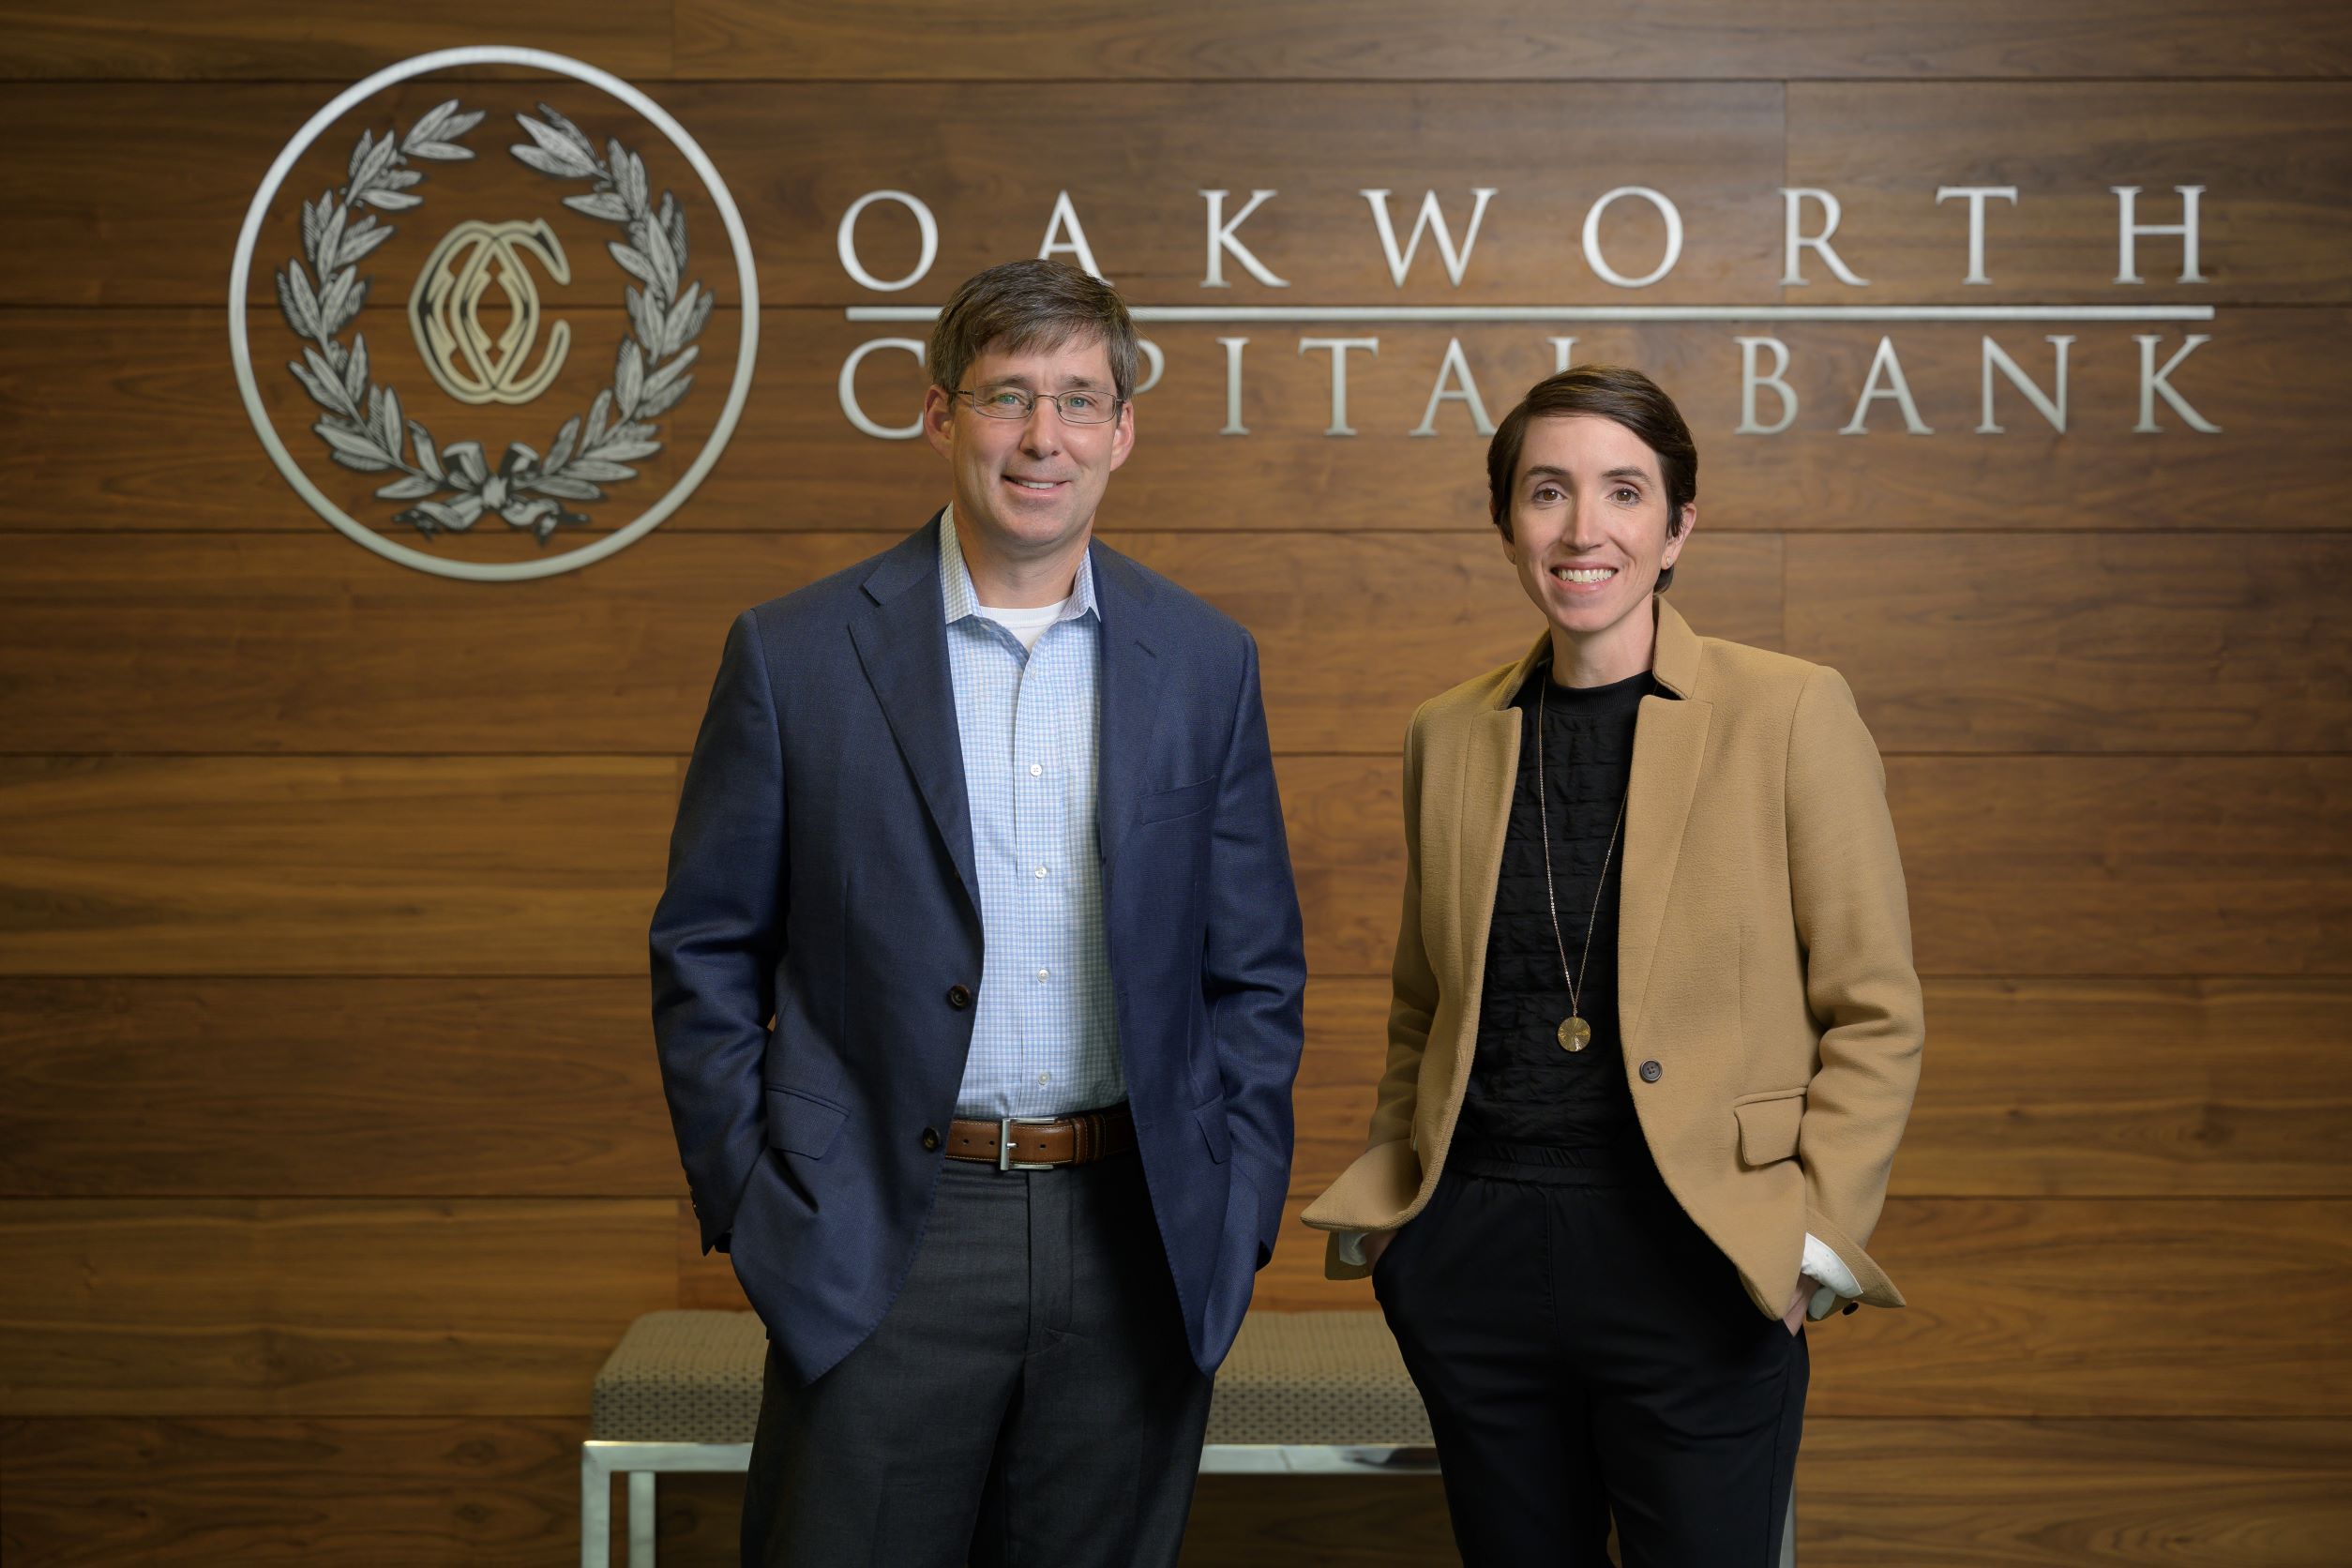 Oakworth Capital Bank's CEO Scott Reed and Treasury Management Advisor Amelia Ricks